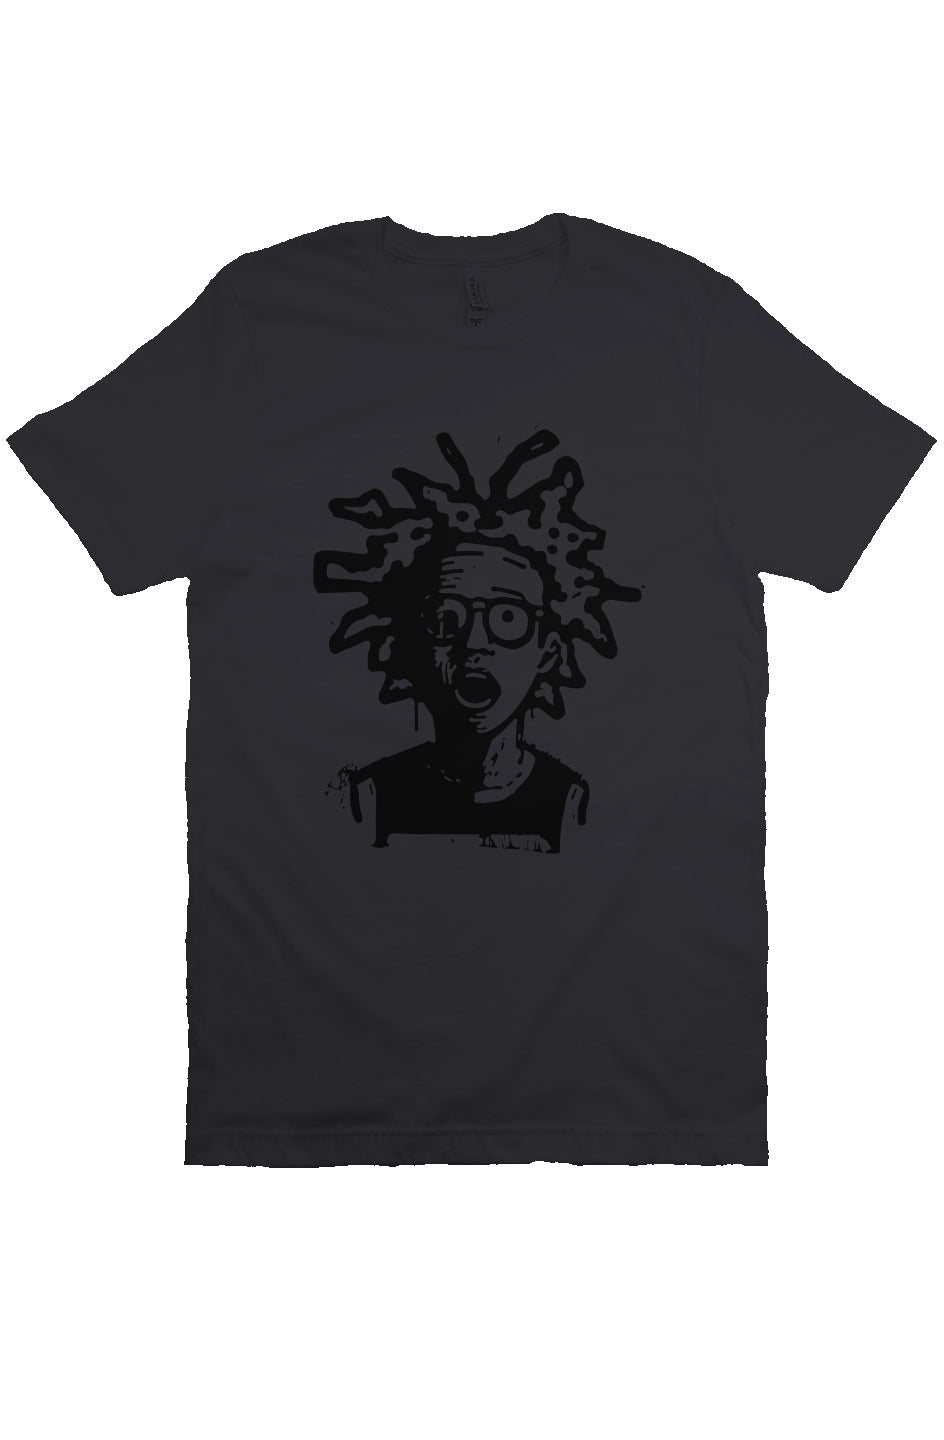 DuGamii "Basquiat Inspired Artwork" Premium Vintage Black T-Shirt